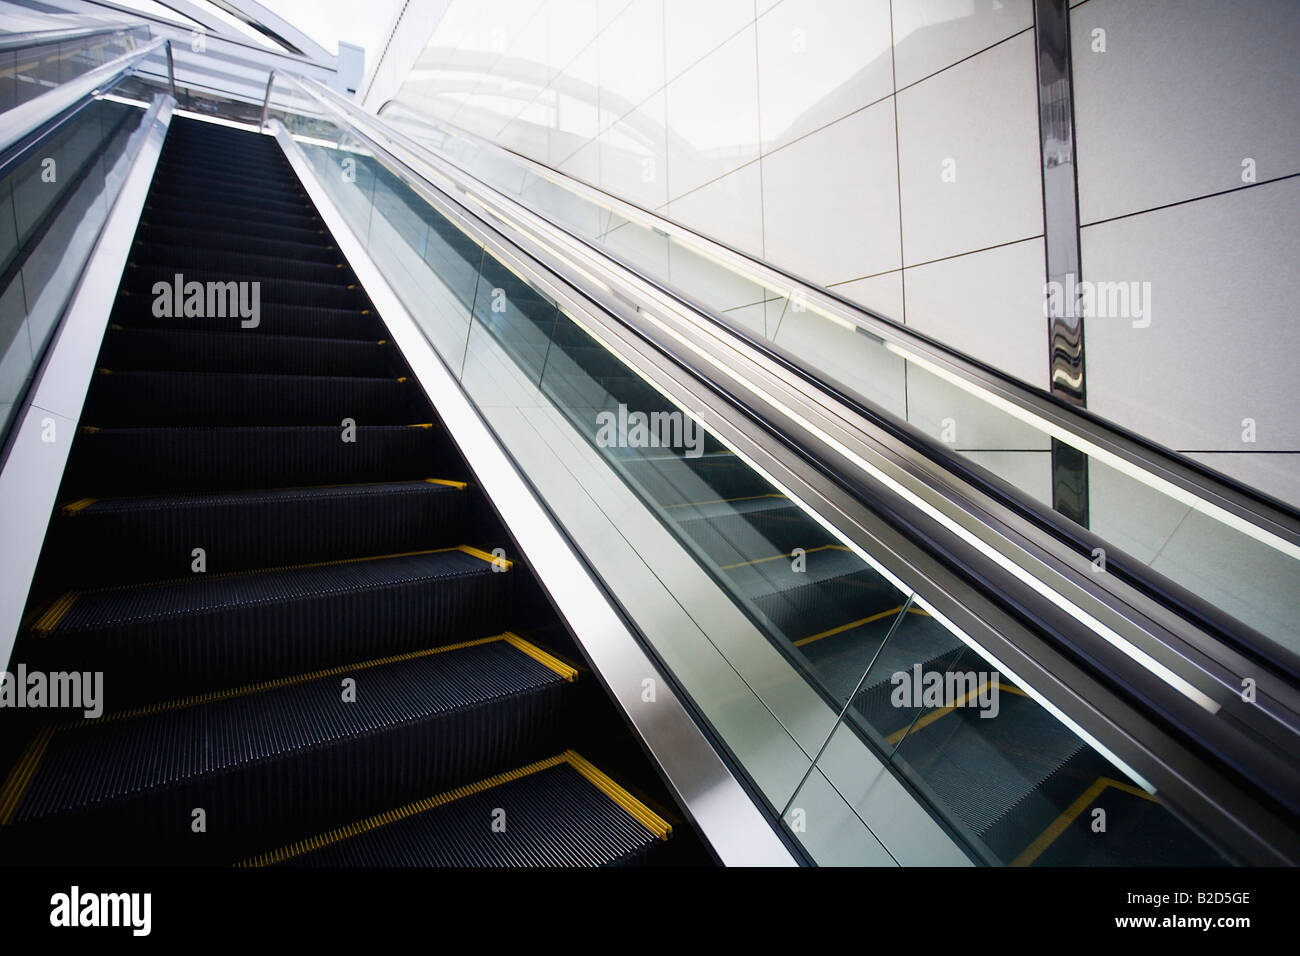 Japan, Osaka, JR Station, man on top of escalator Stock Photo